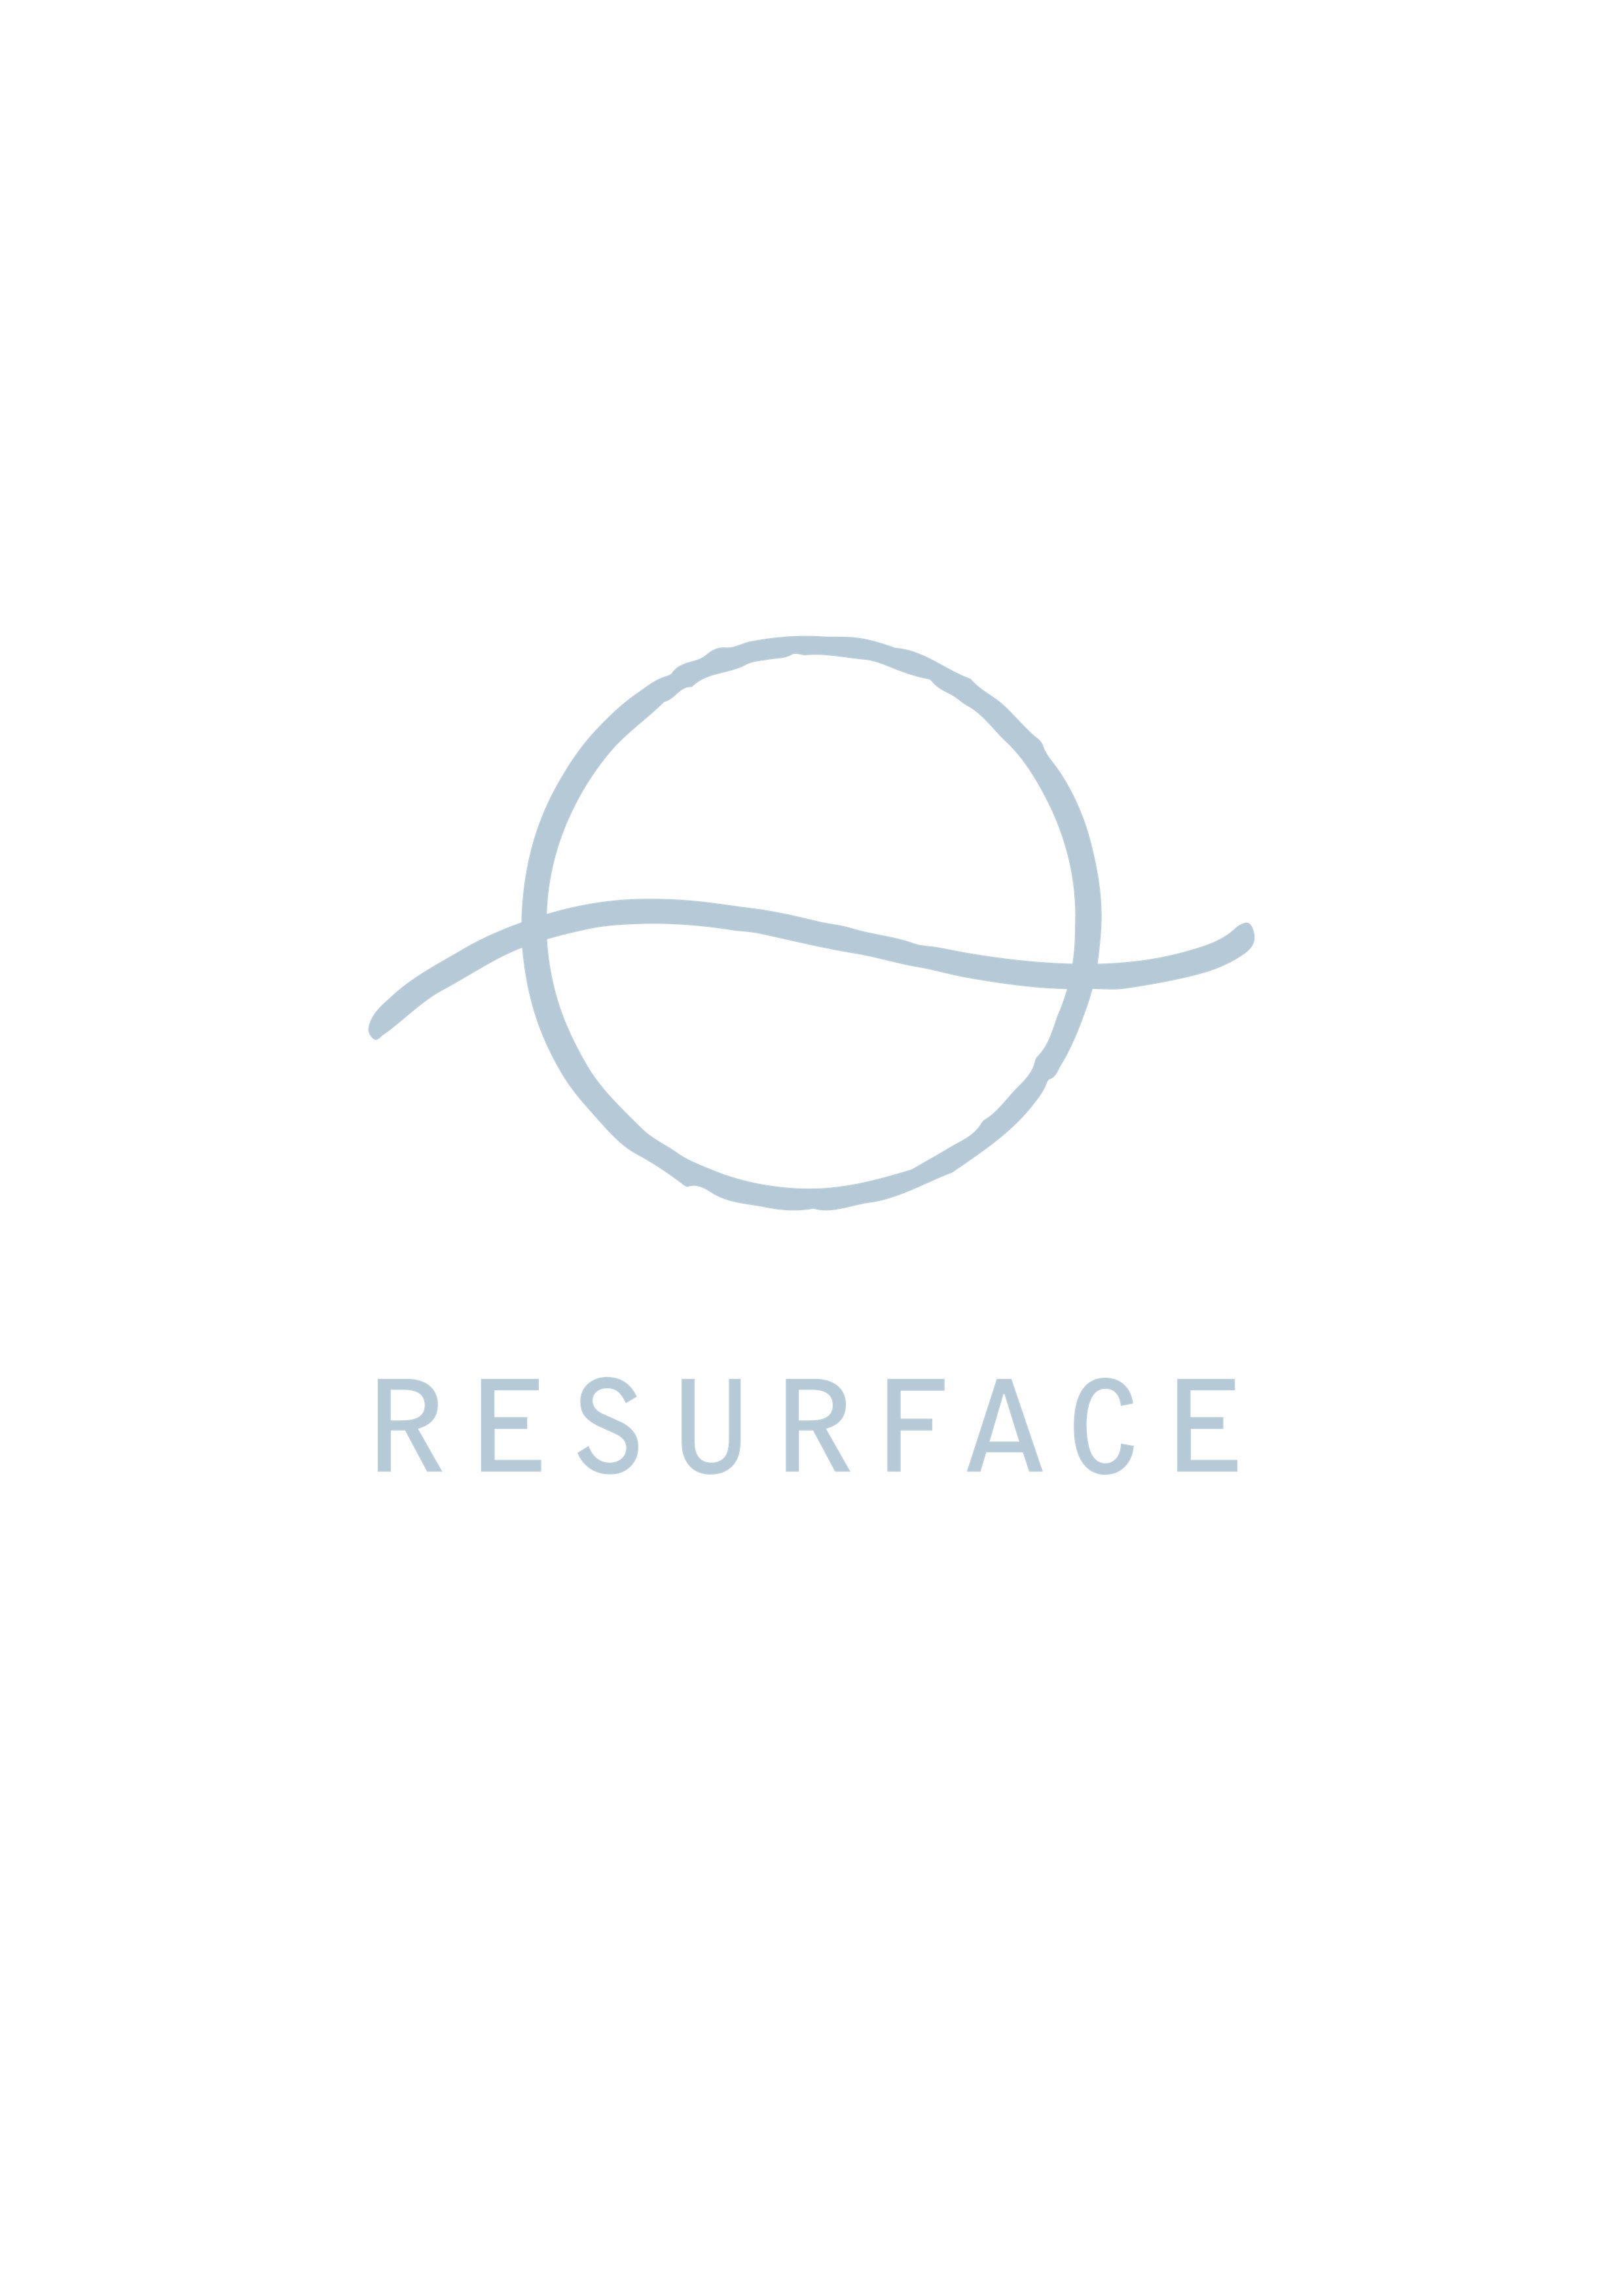 Resurface Behavioural Health Ltd (T/A Resurface) logo